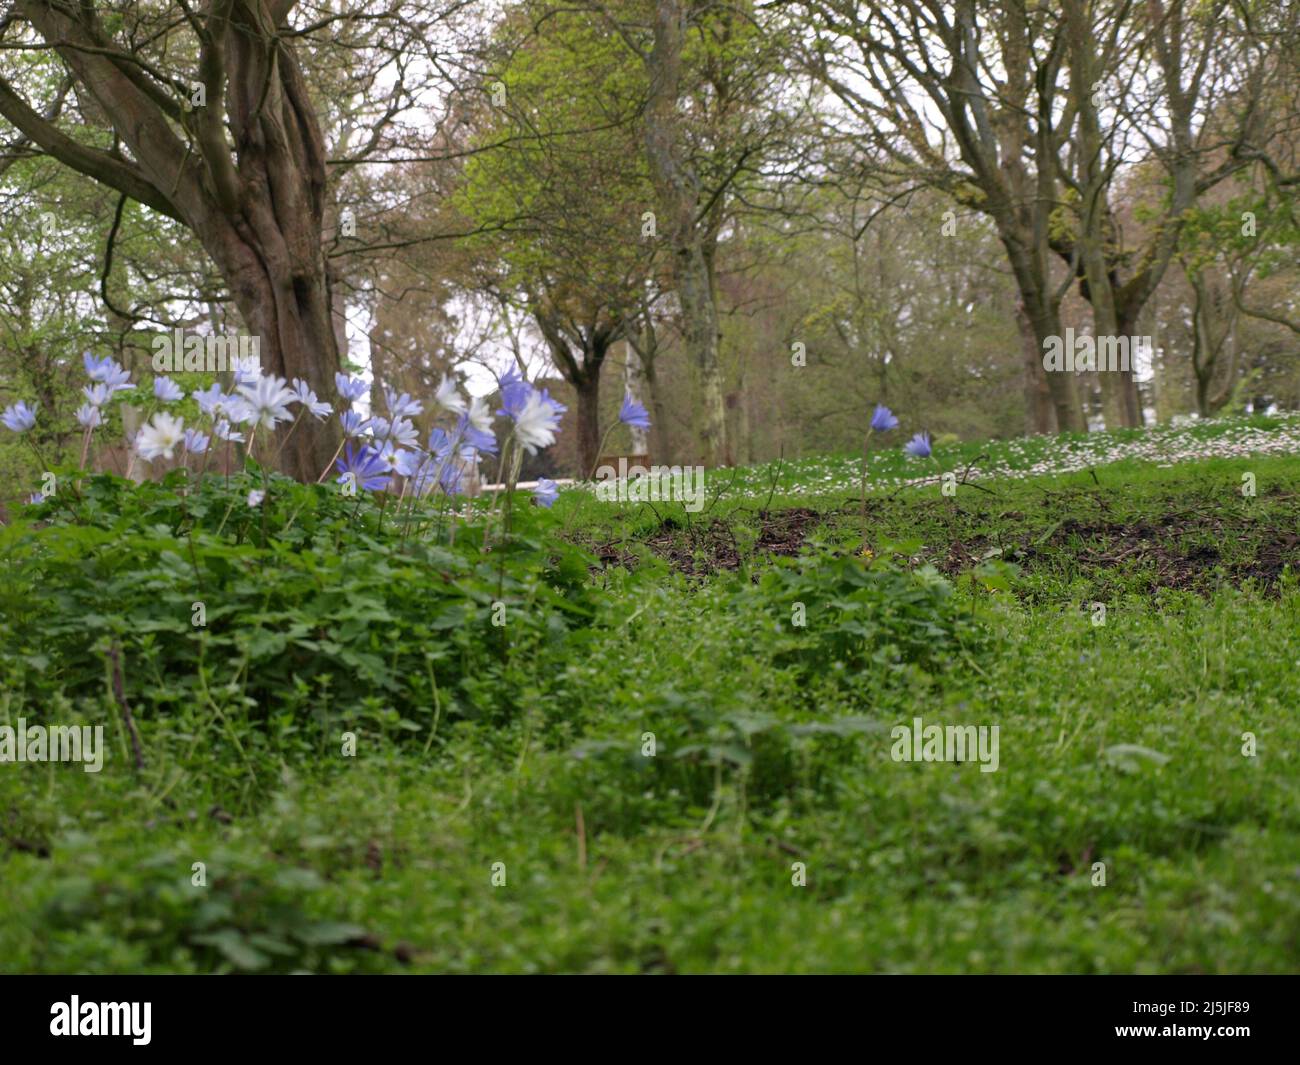 Dublin Ireland Botanic garden flowers creeks and forest Stock Photo